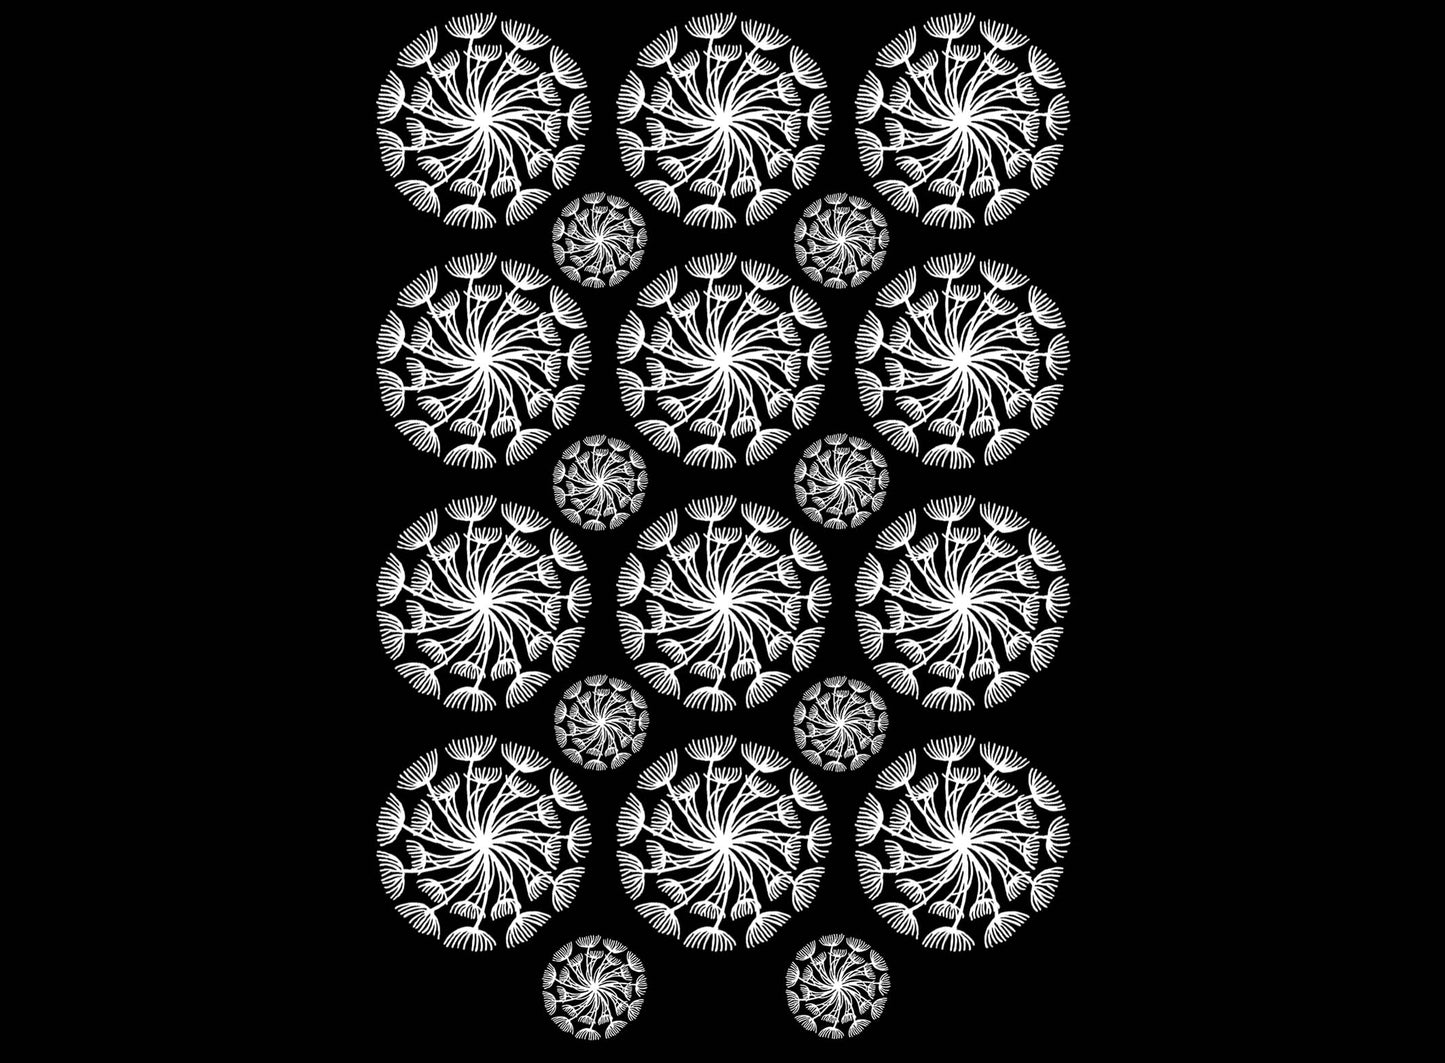 Dandelion Swirls 20 pcs 1/2" to 1" White Fused Glass Decals